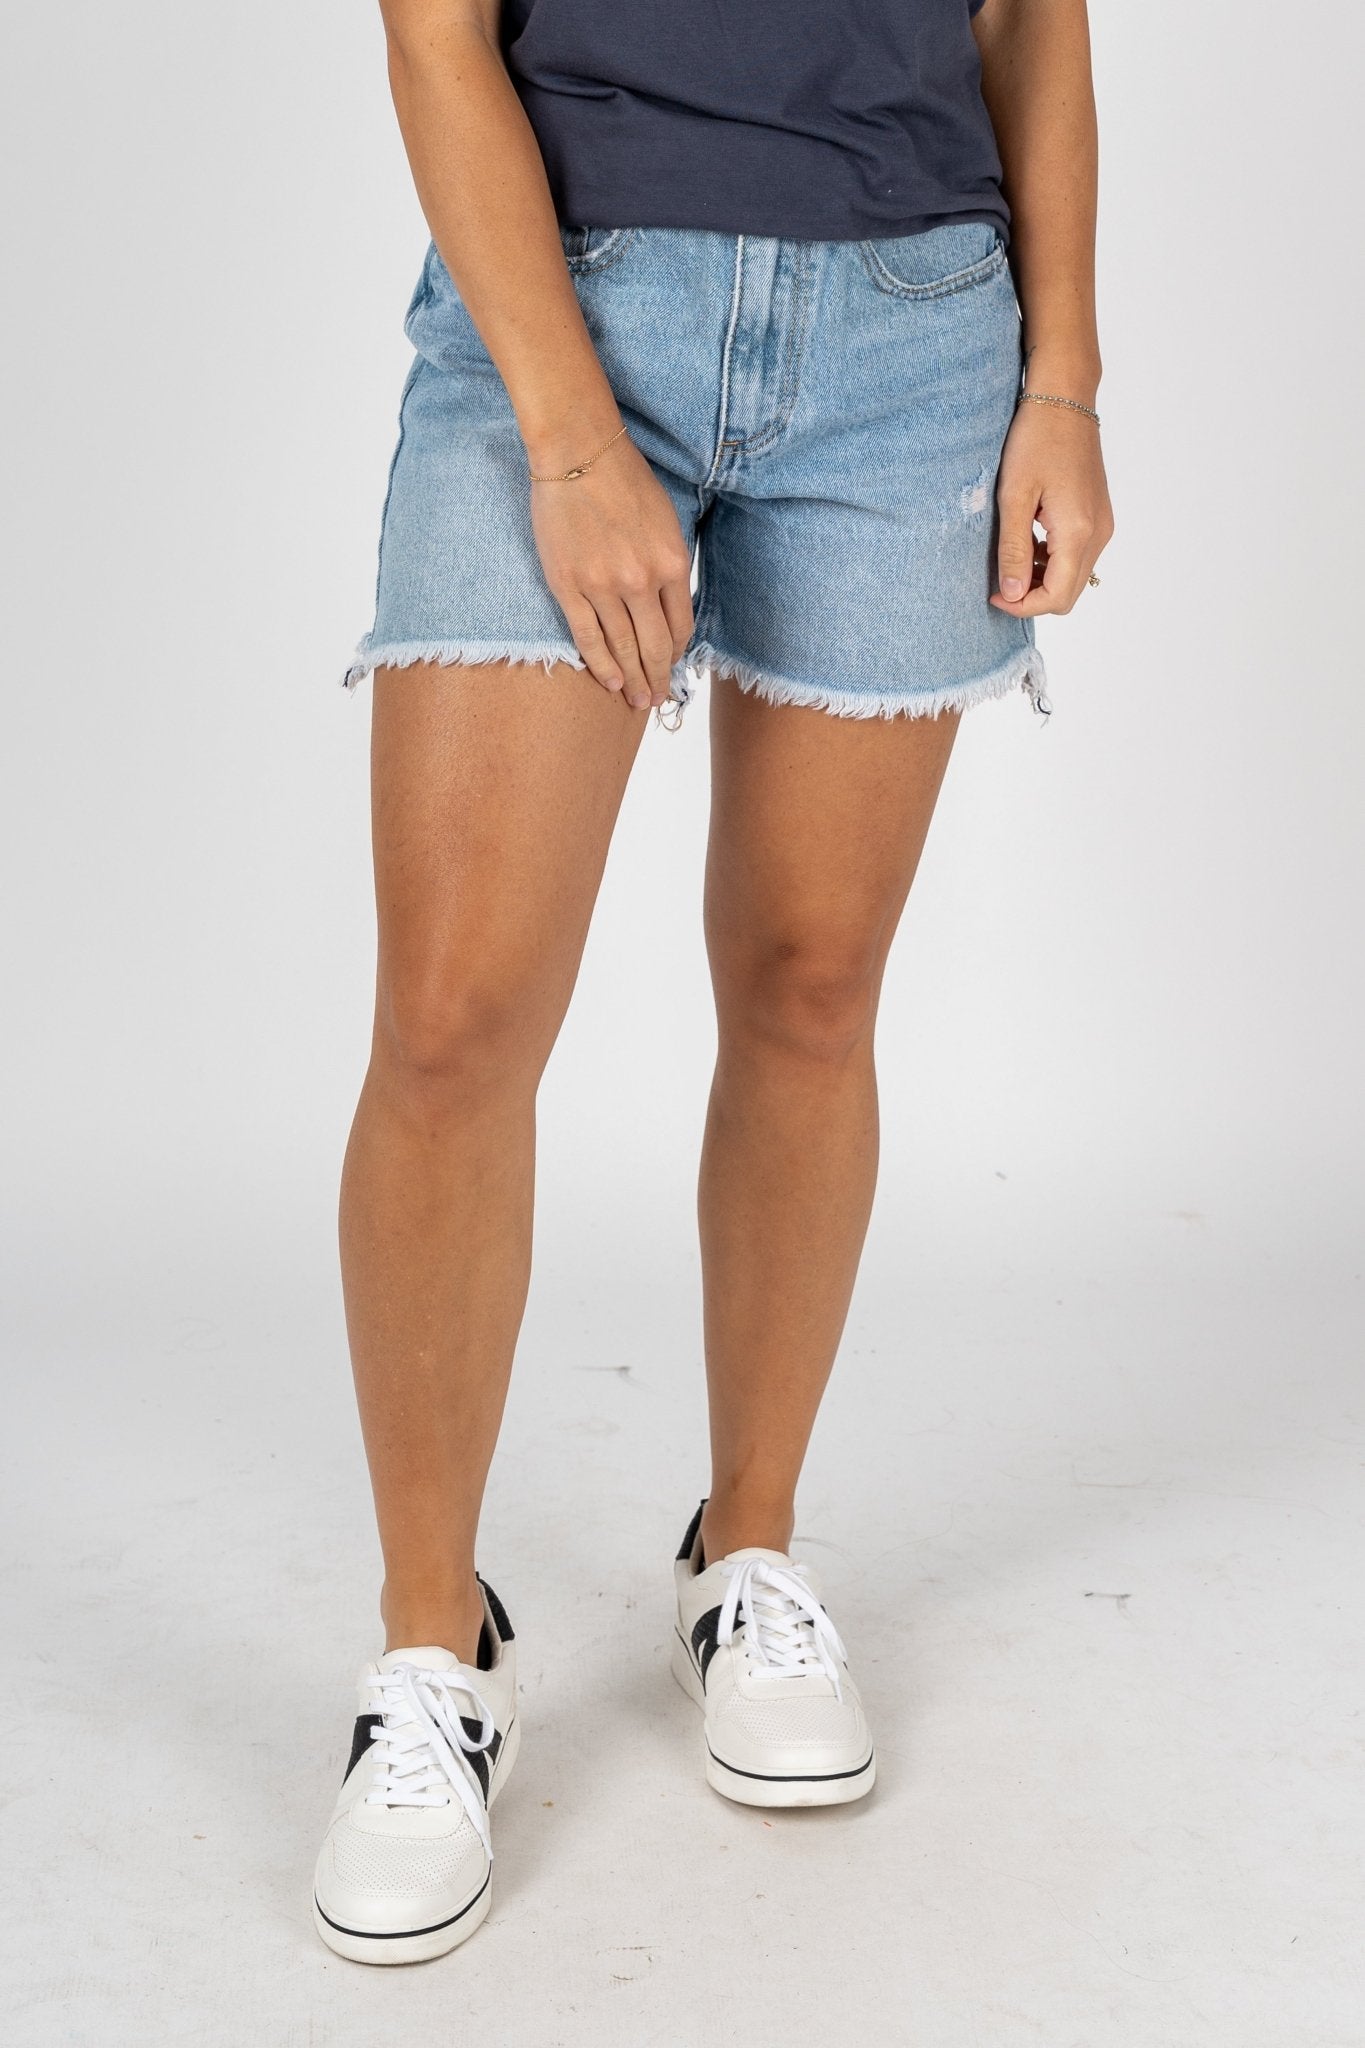 Distressed denim shorts medium - Affordable Shorts - Boutique Shorts at Lush Fashion Lounge Boutique in Oklahoma City